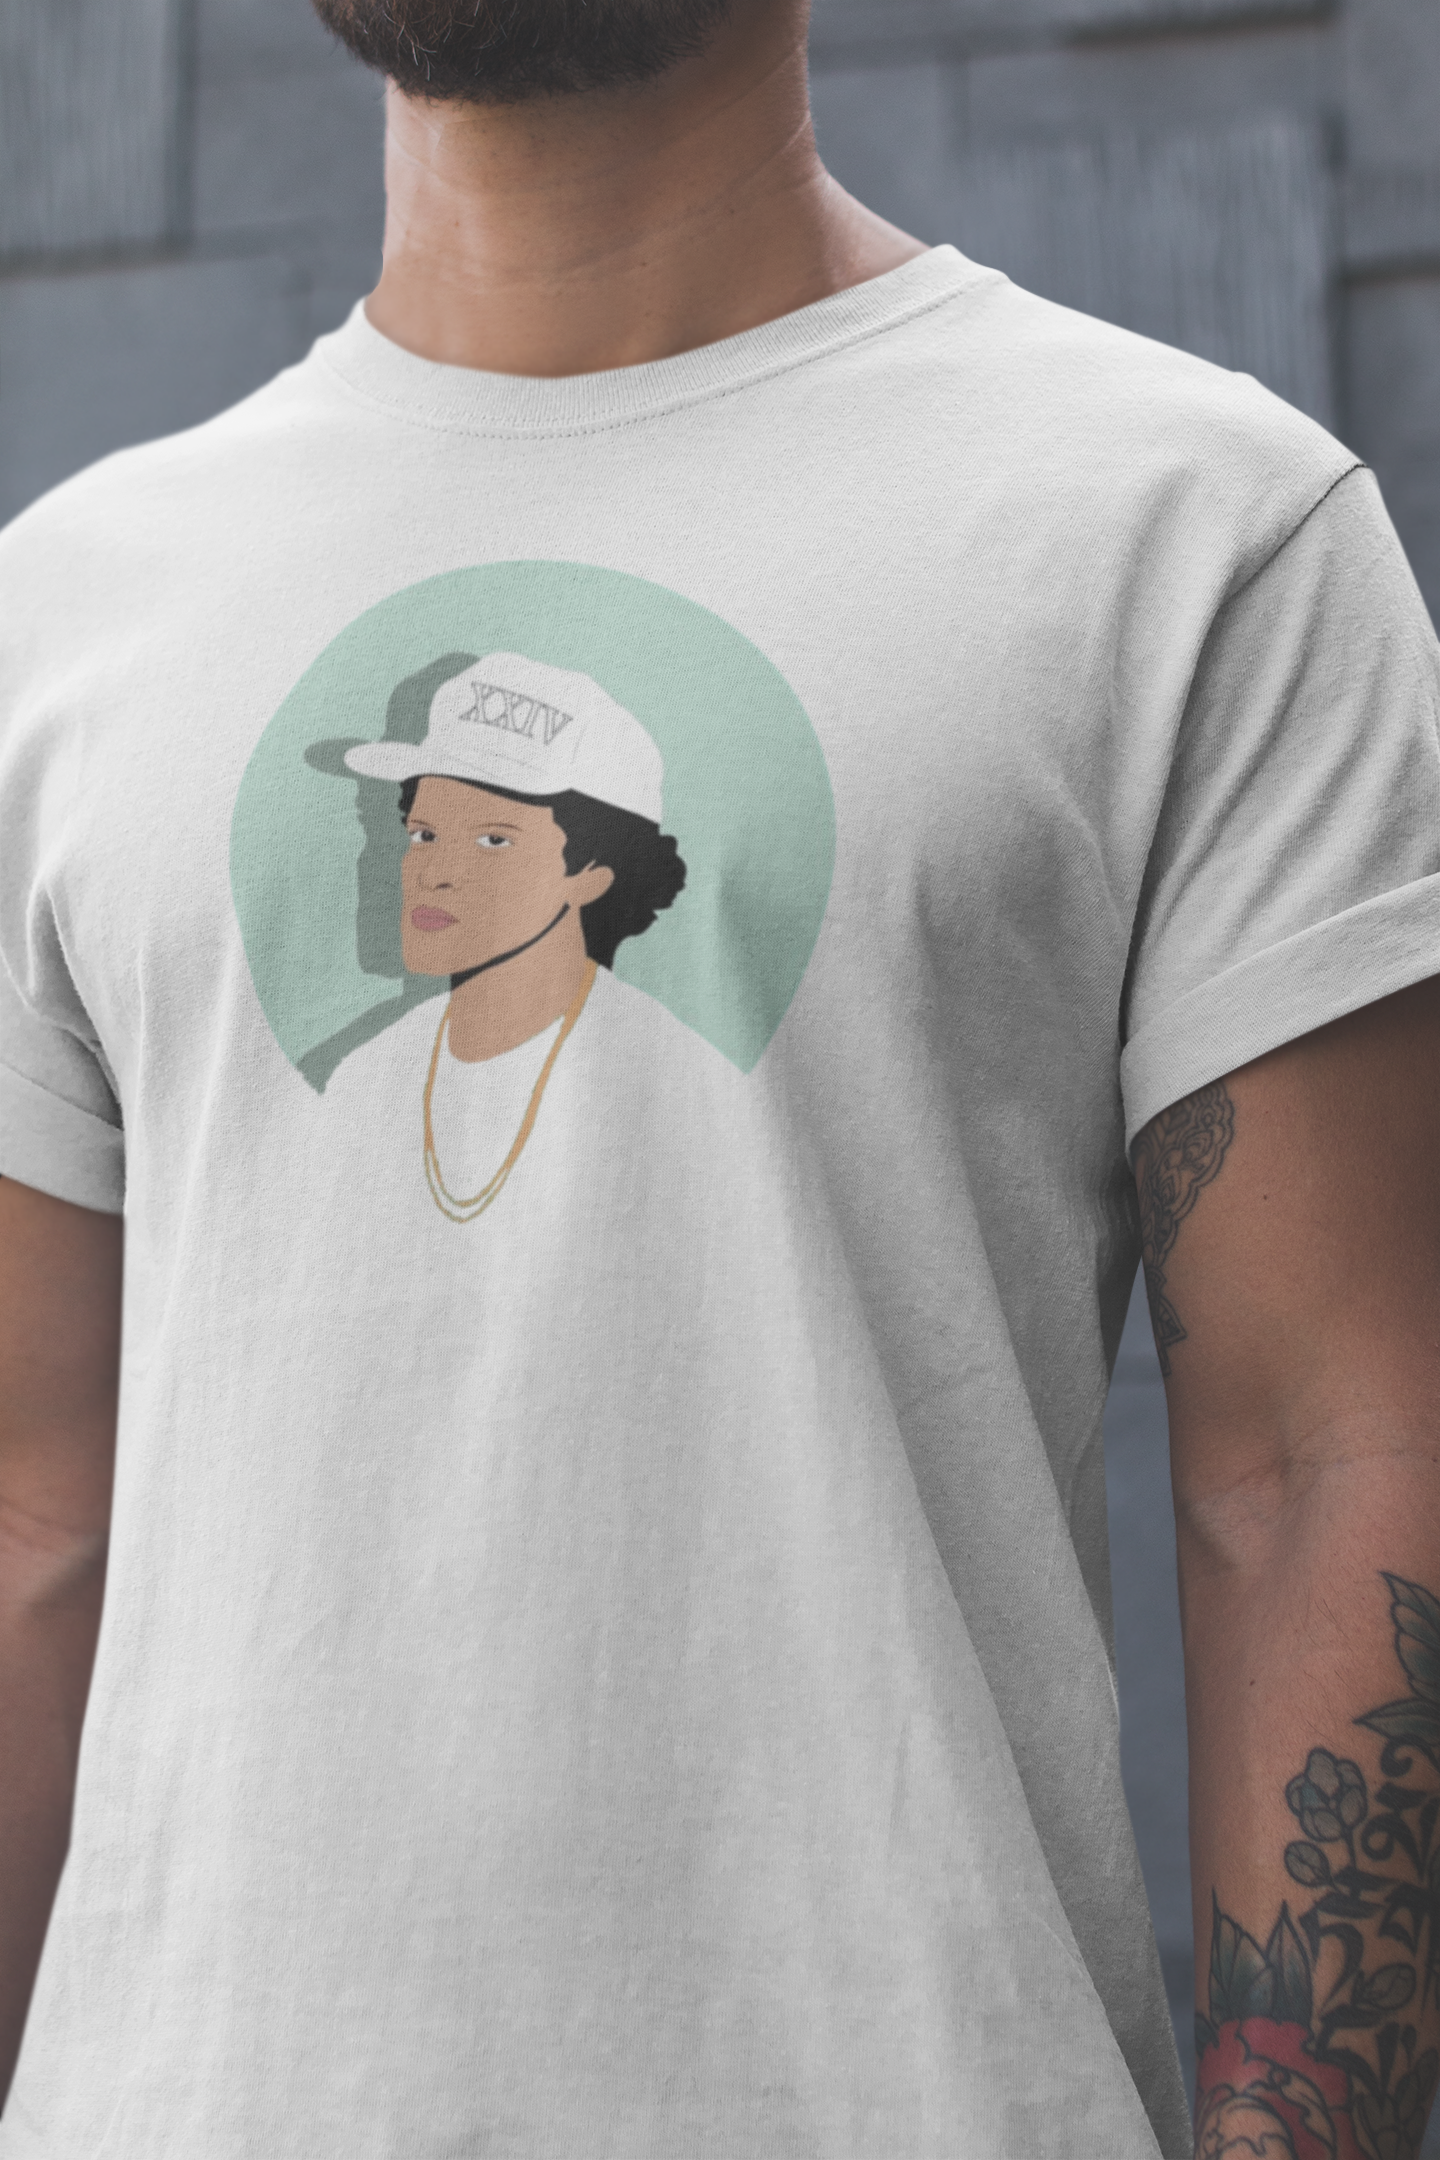 Camiseta "Bruno Mars" Clássica - Música